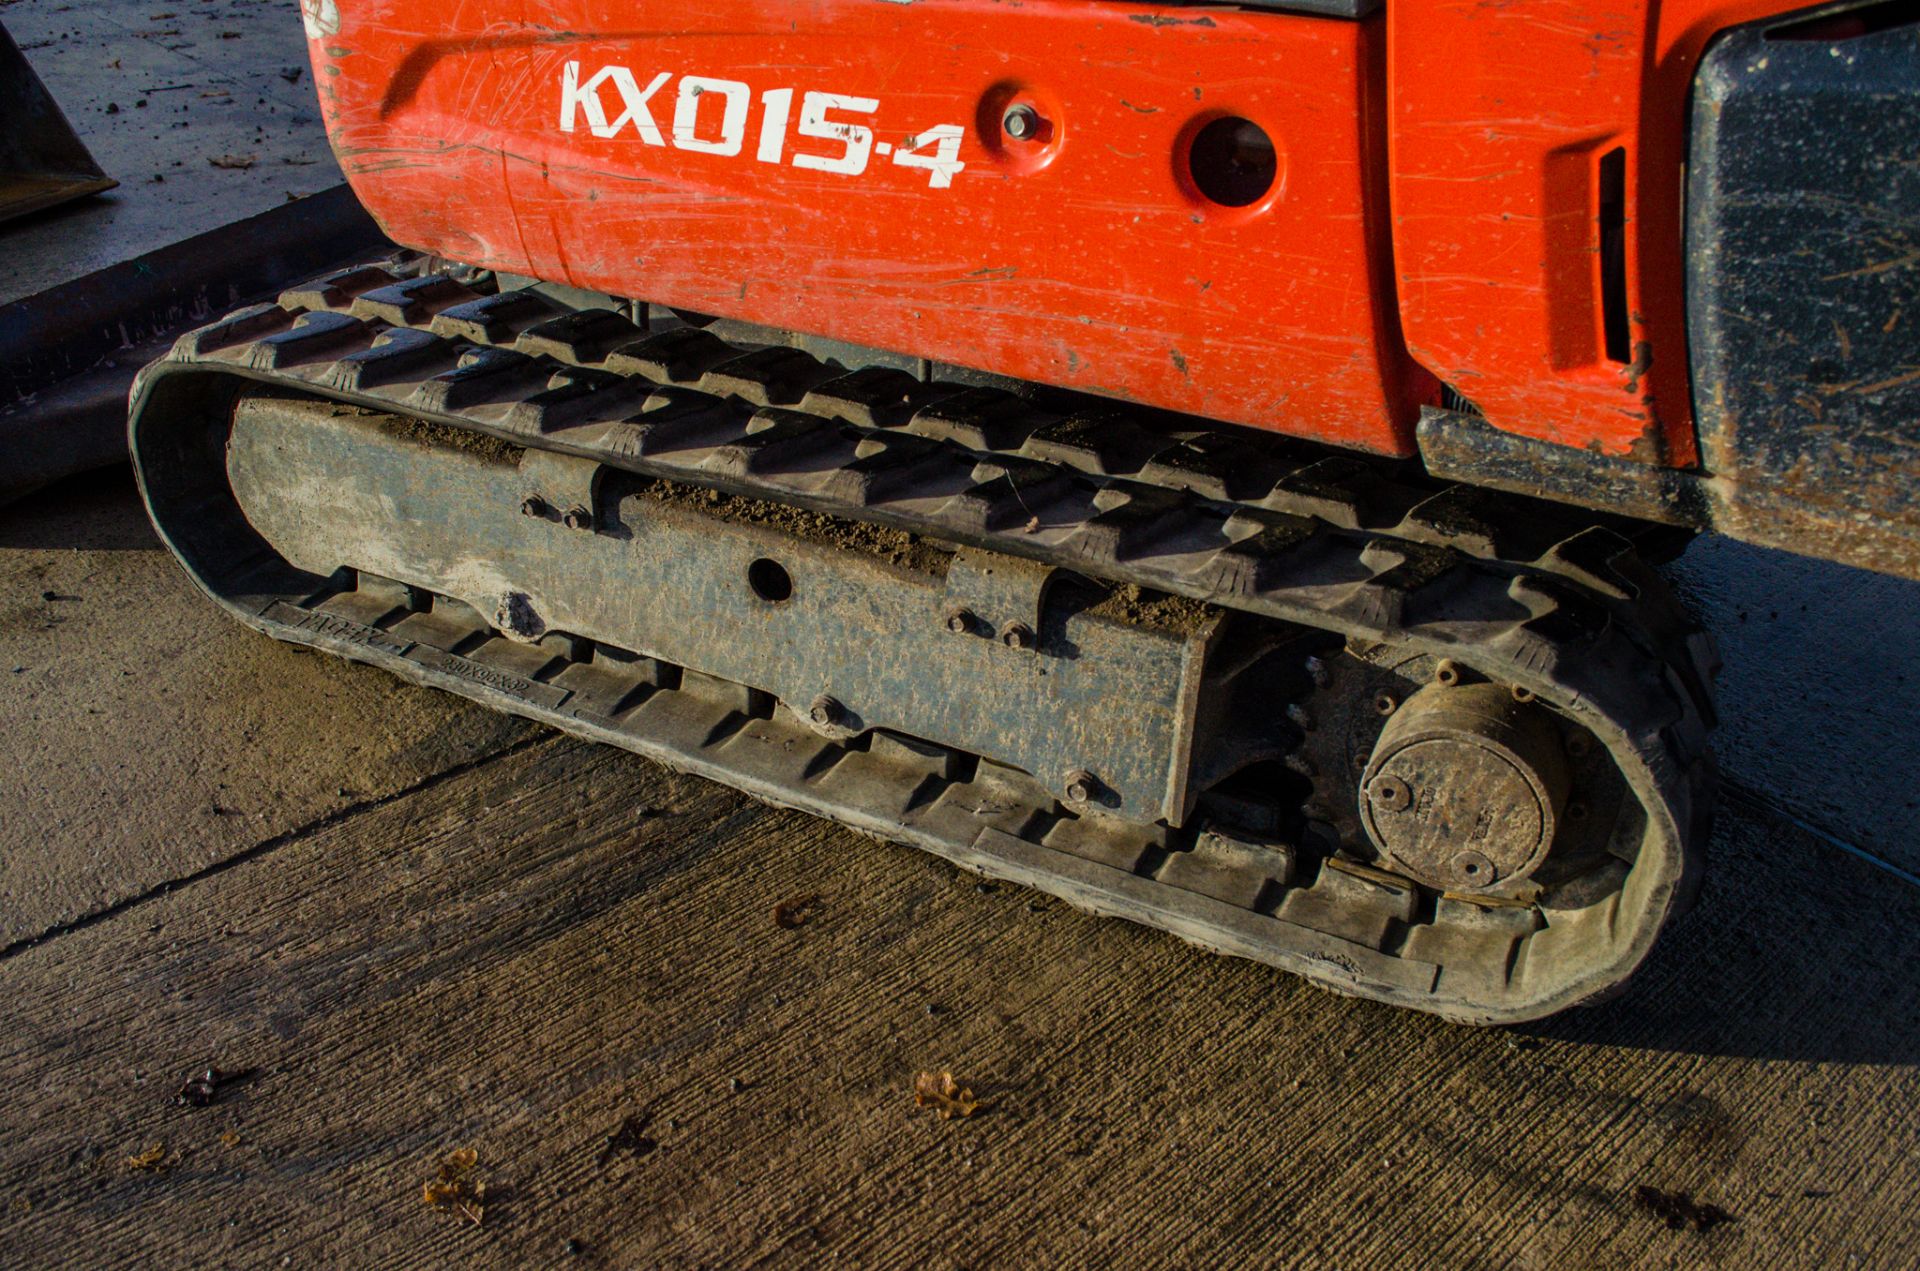 Kubota KX015-4 1.5 tonne rubber tracked mini excavator Year: 2018 S/N: 62575 Recorded Hours: 1764 - Image 10 of 19